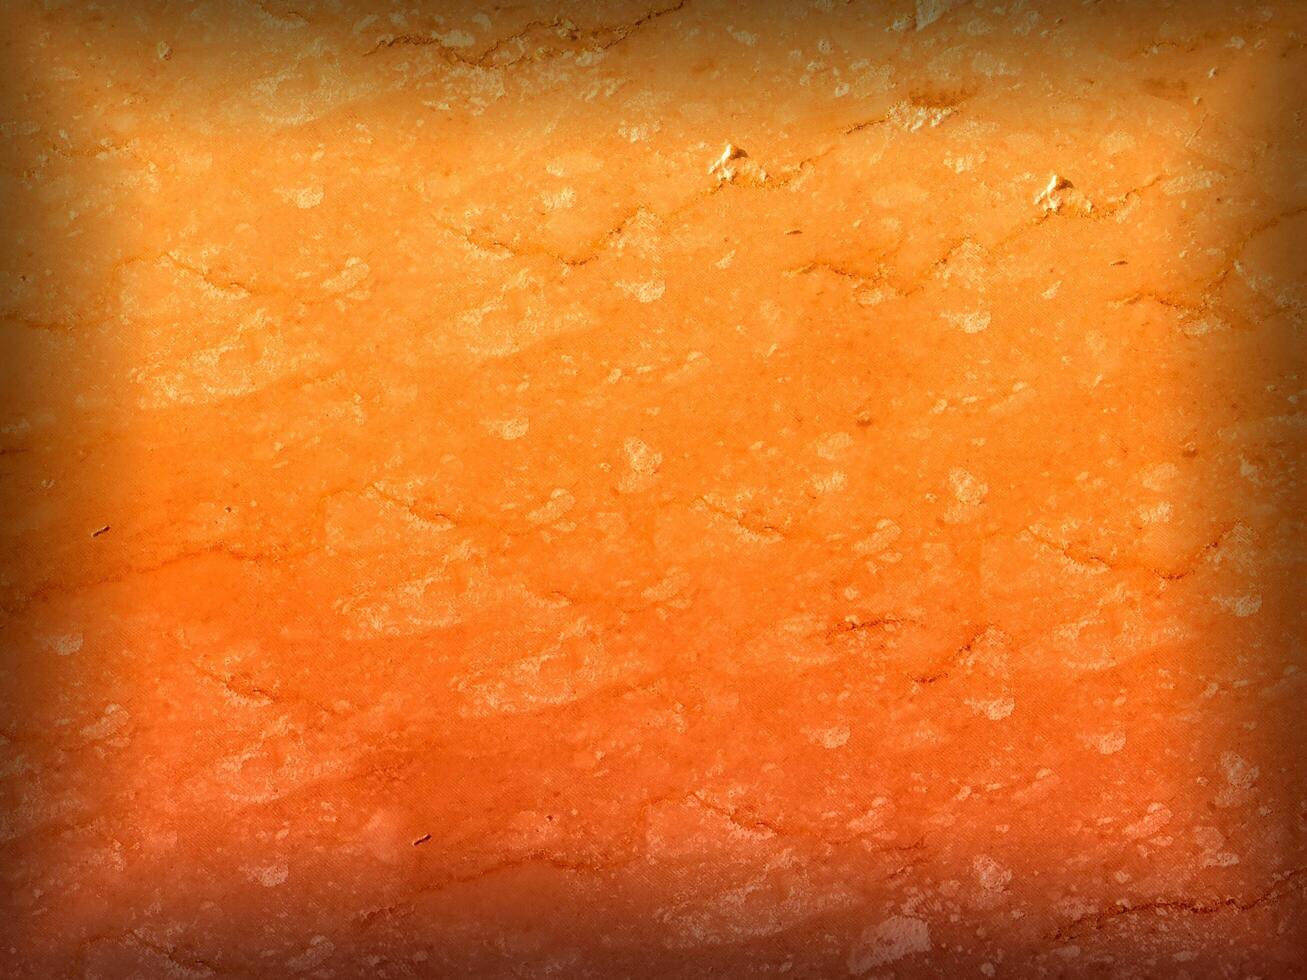 texture de marbre orange photo